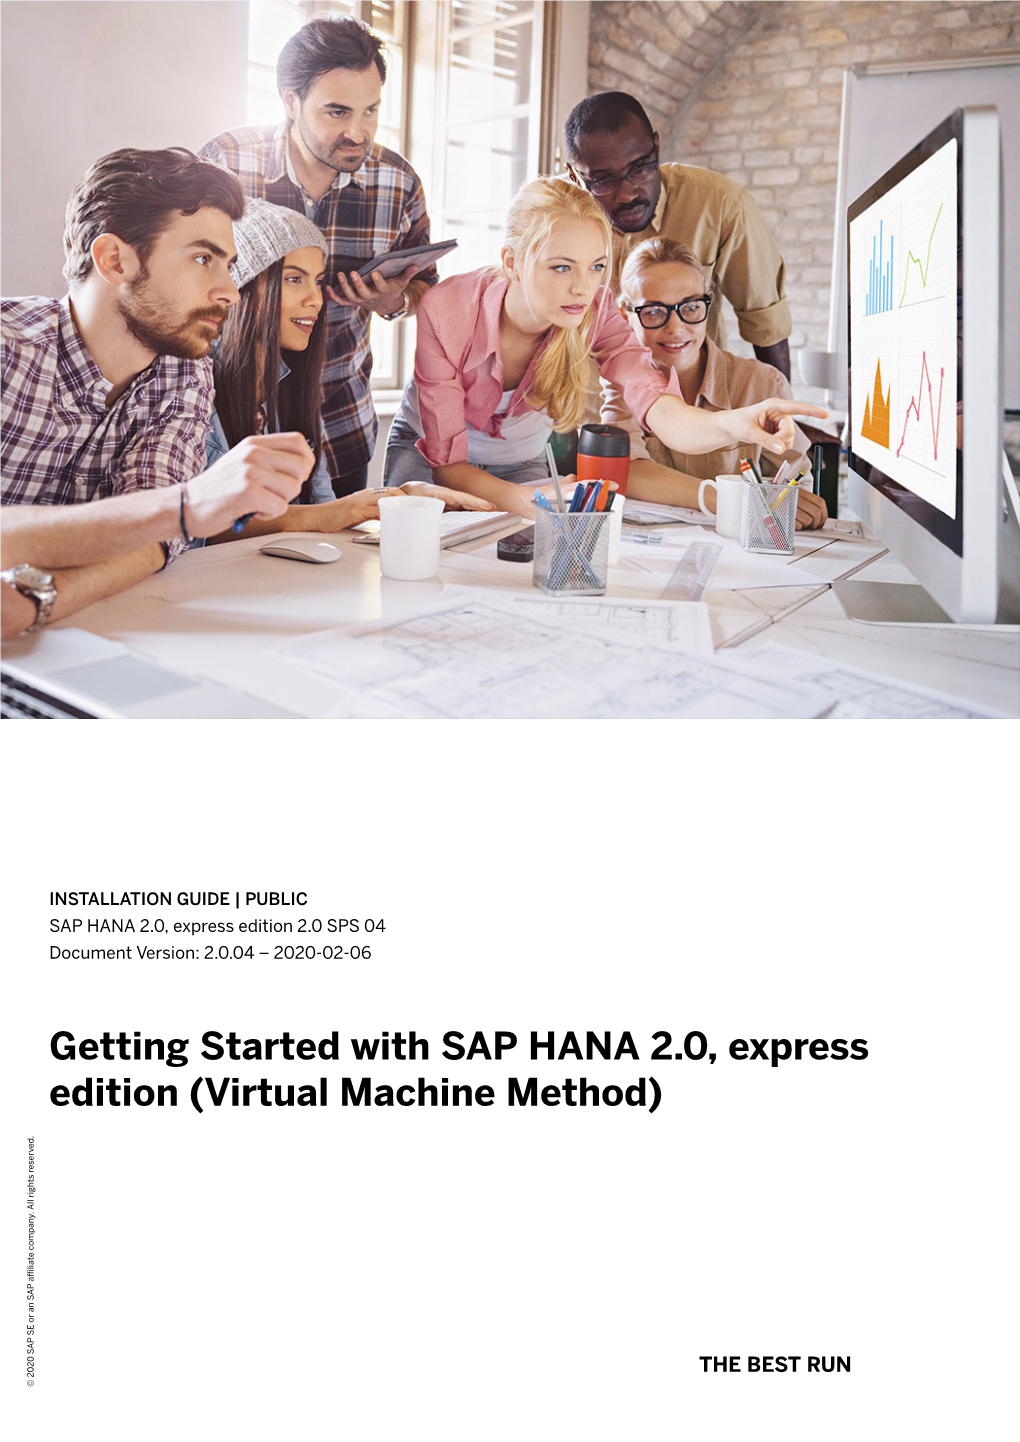 Getting Started with SAP HANA 2.0, Express Edition (Virtual Machine Method) Company